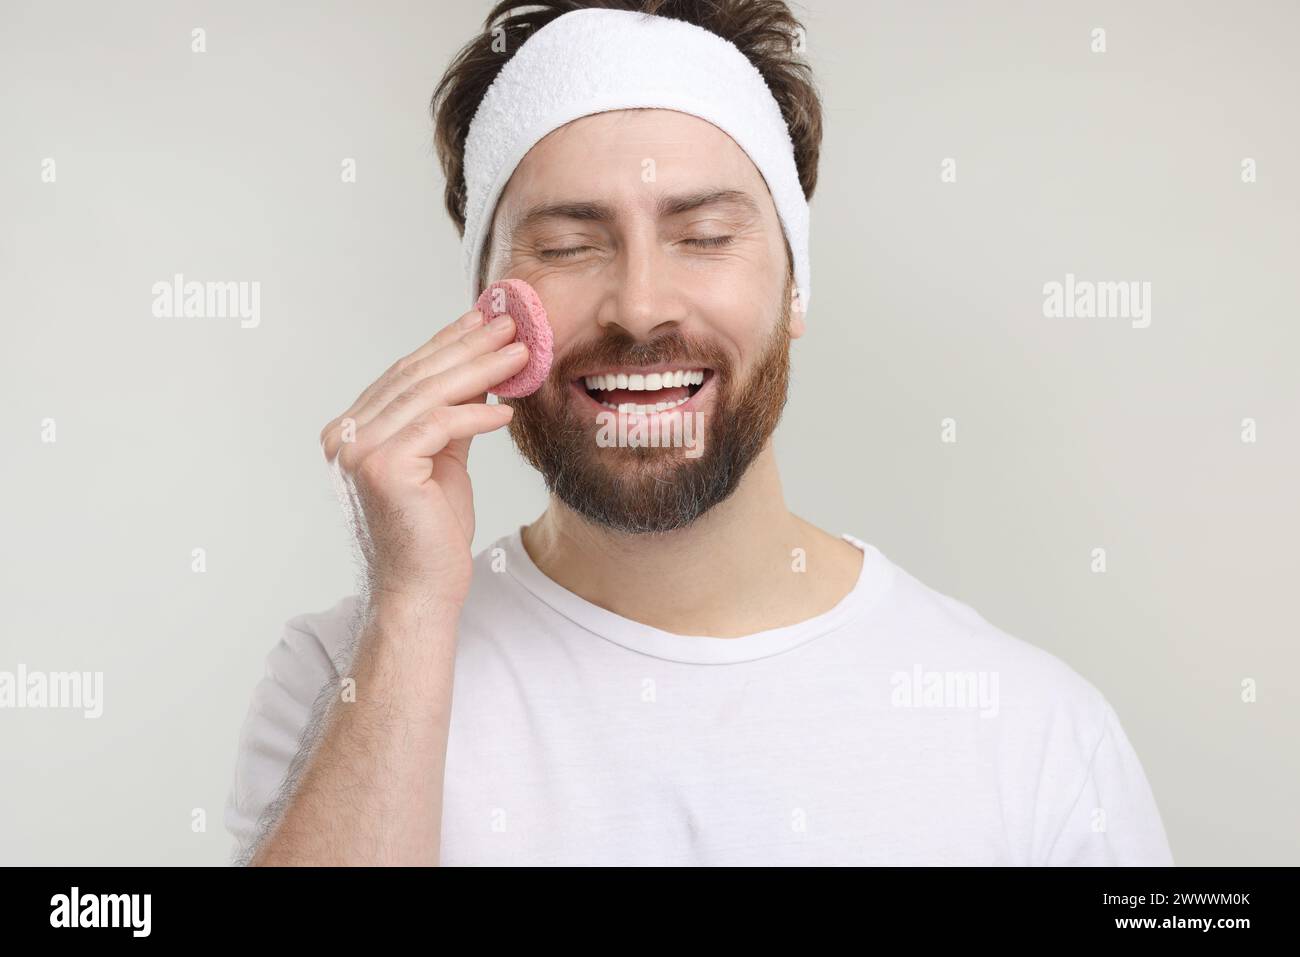 Man with headband washing his face using sponge on light grey background Stock Photo